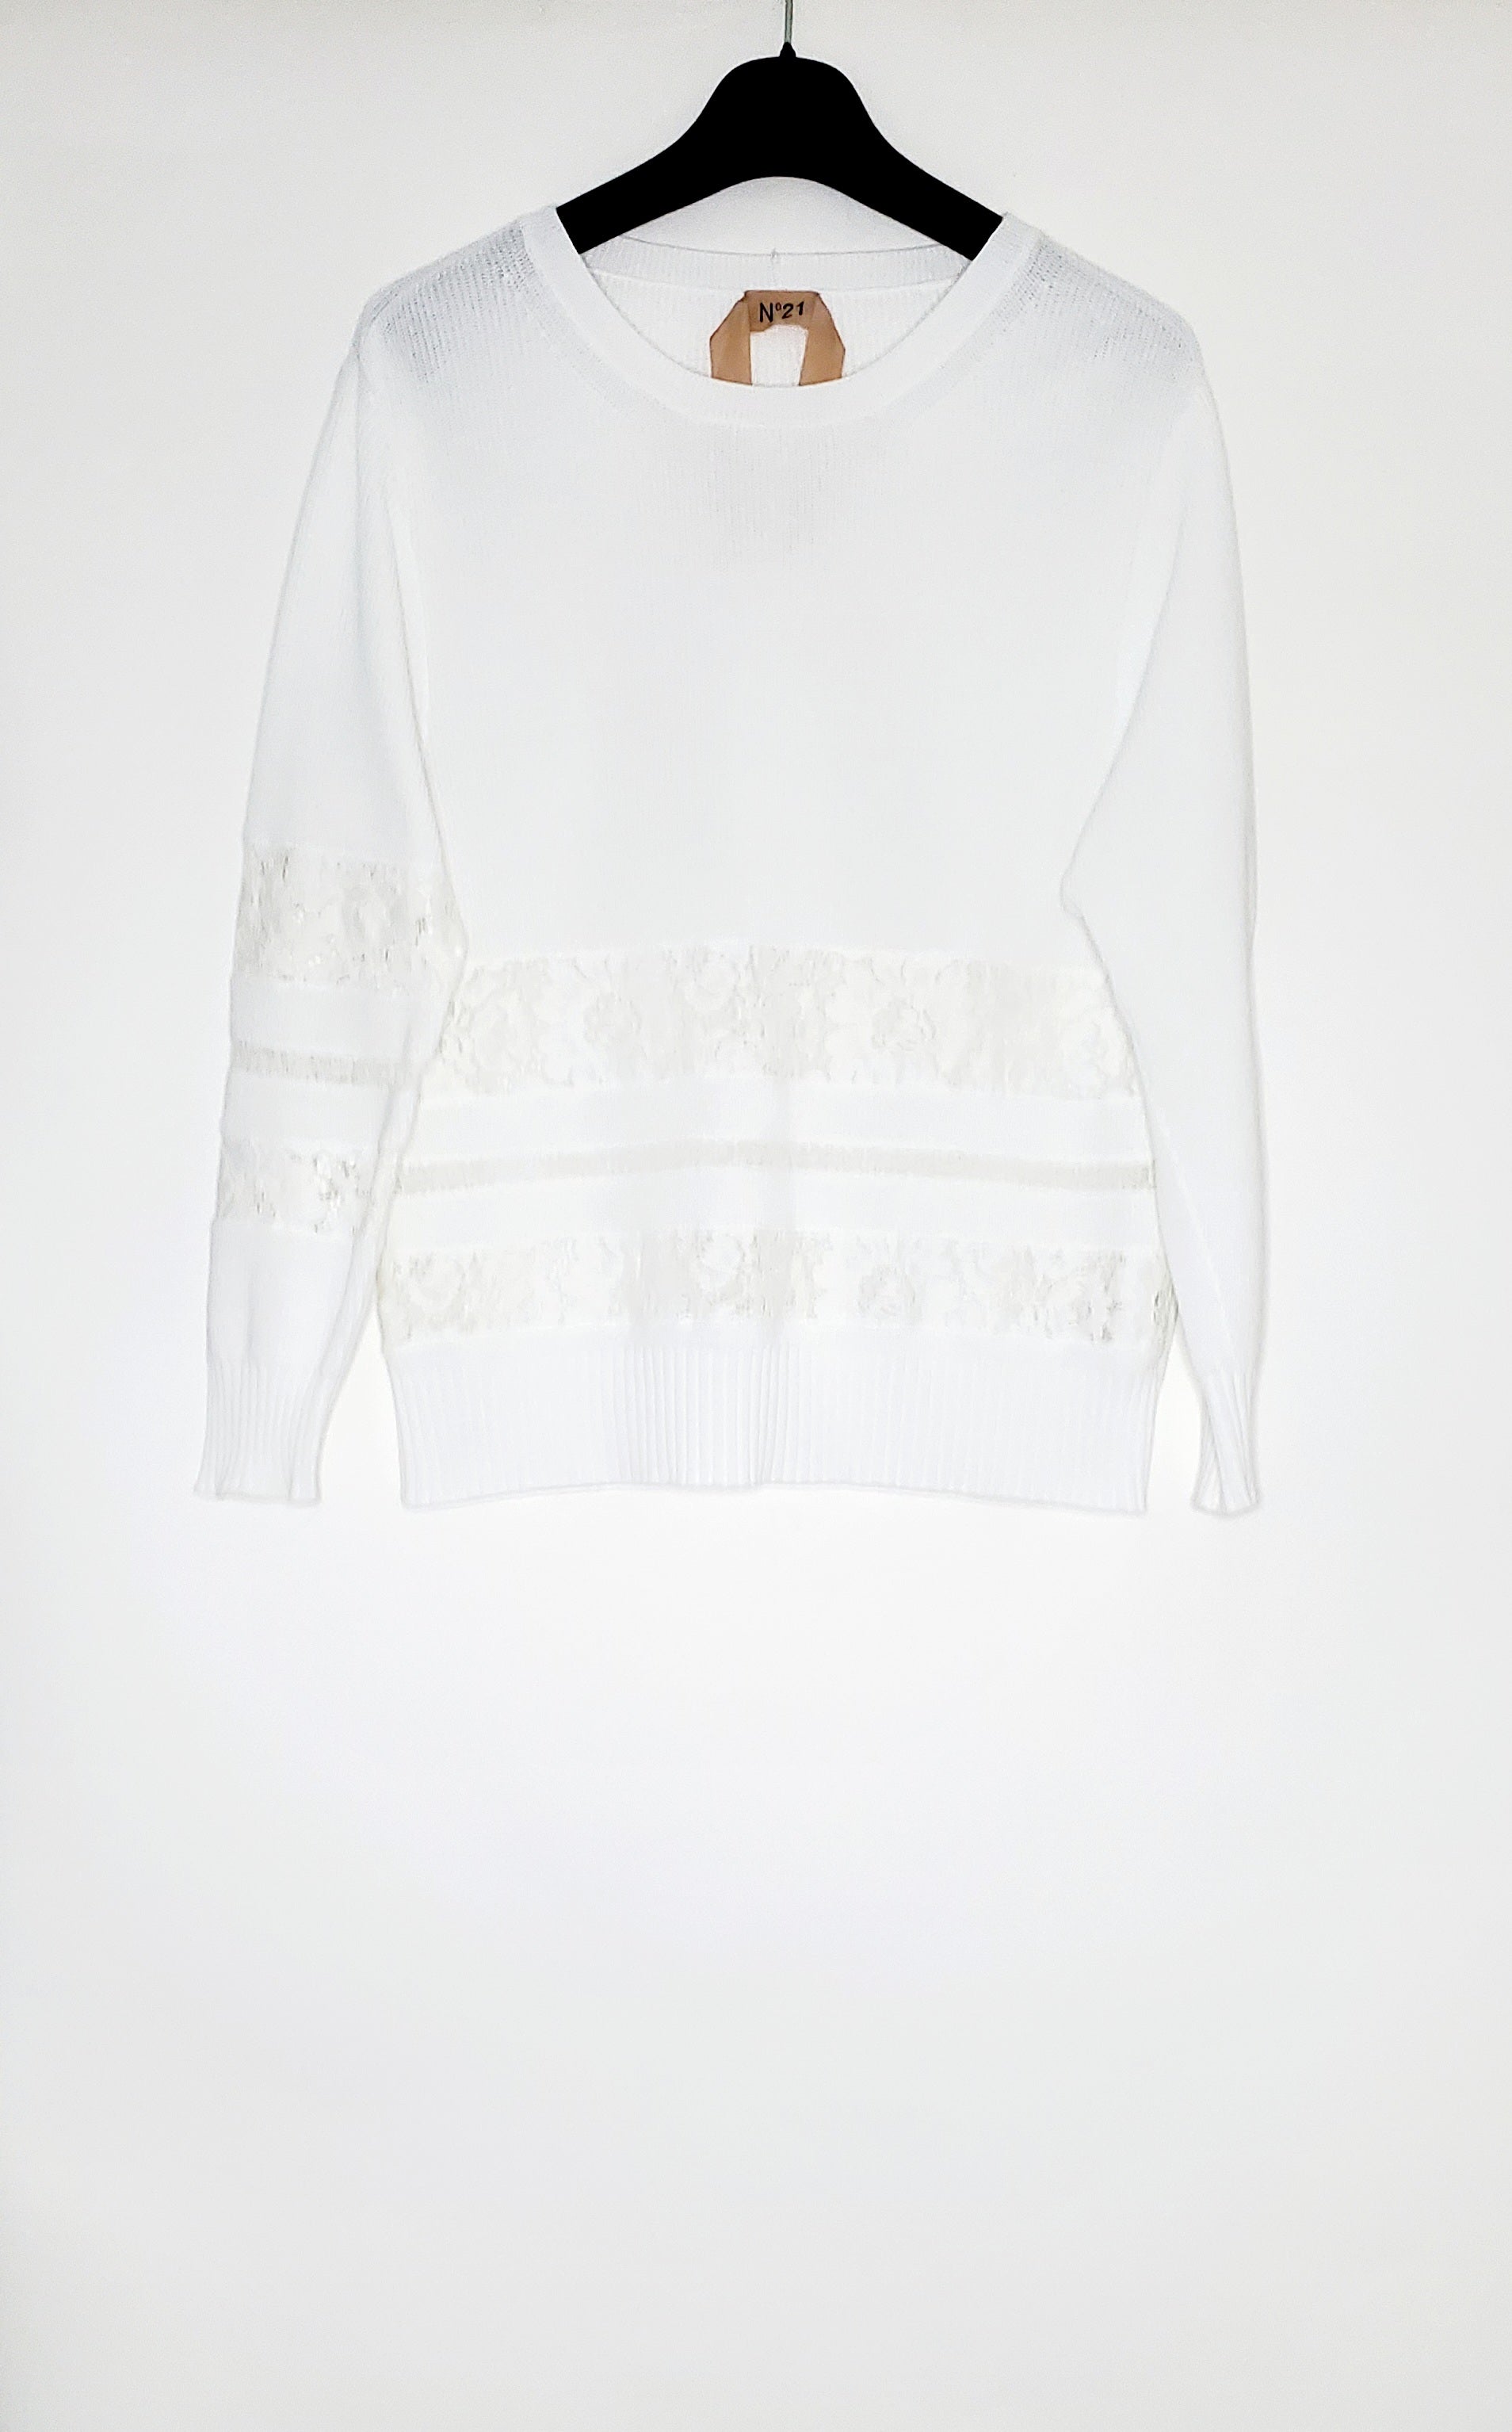 Sweater No21 11-11124-1087